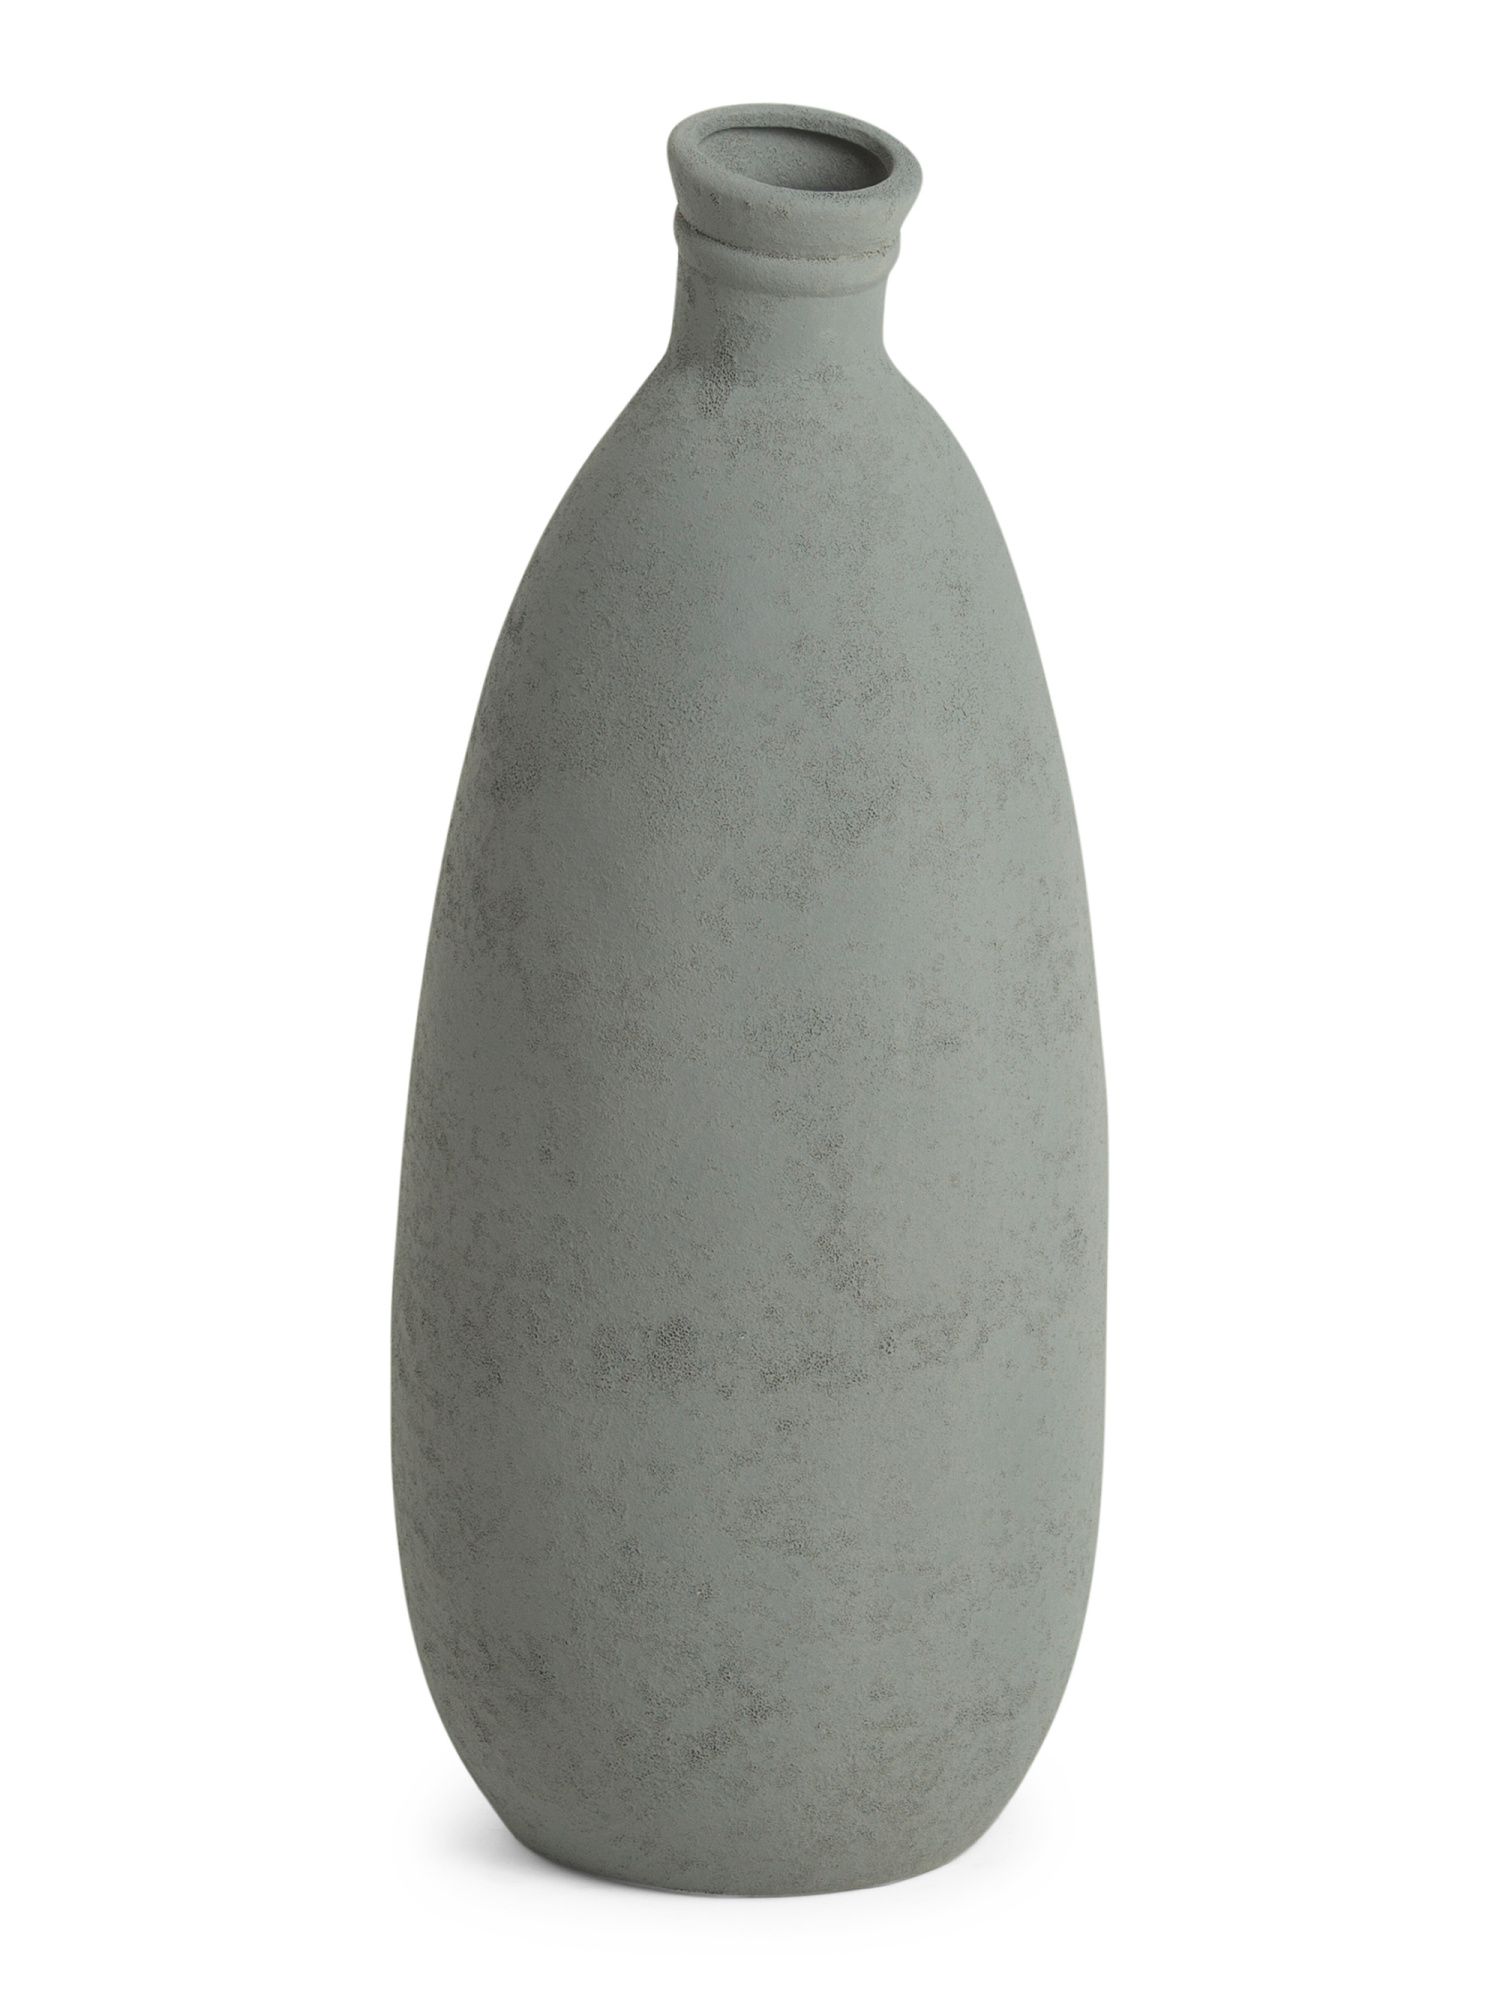 Made In Portugal Ceramic Bottle Vase | The Global Decor Shop | Marshalls | Marshalls